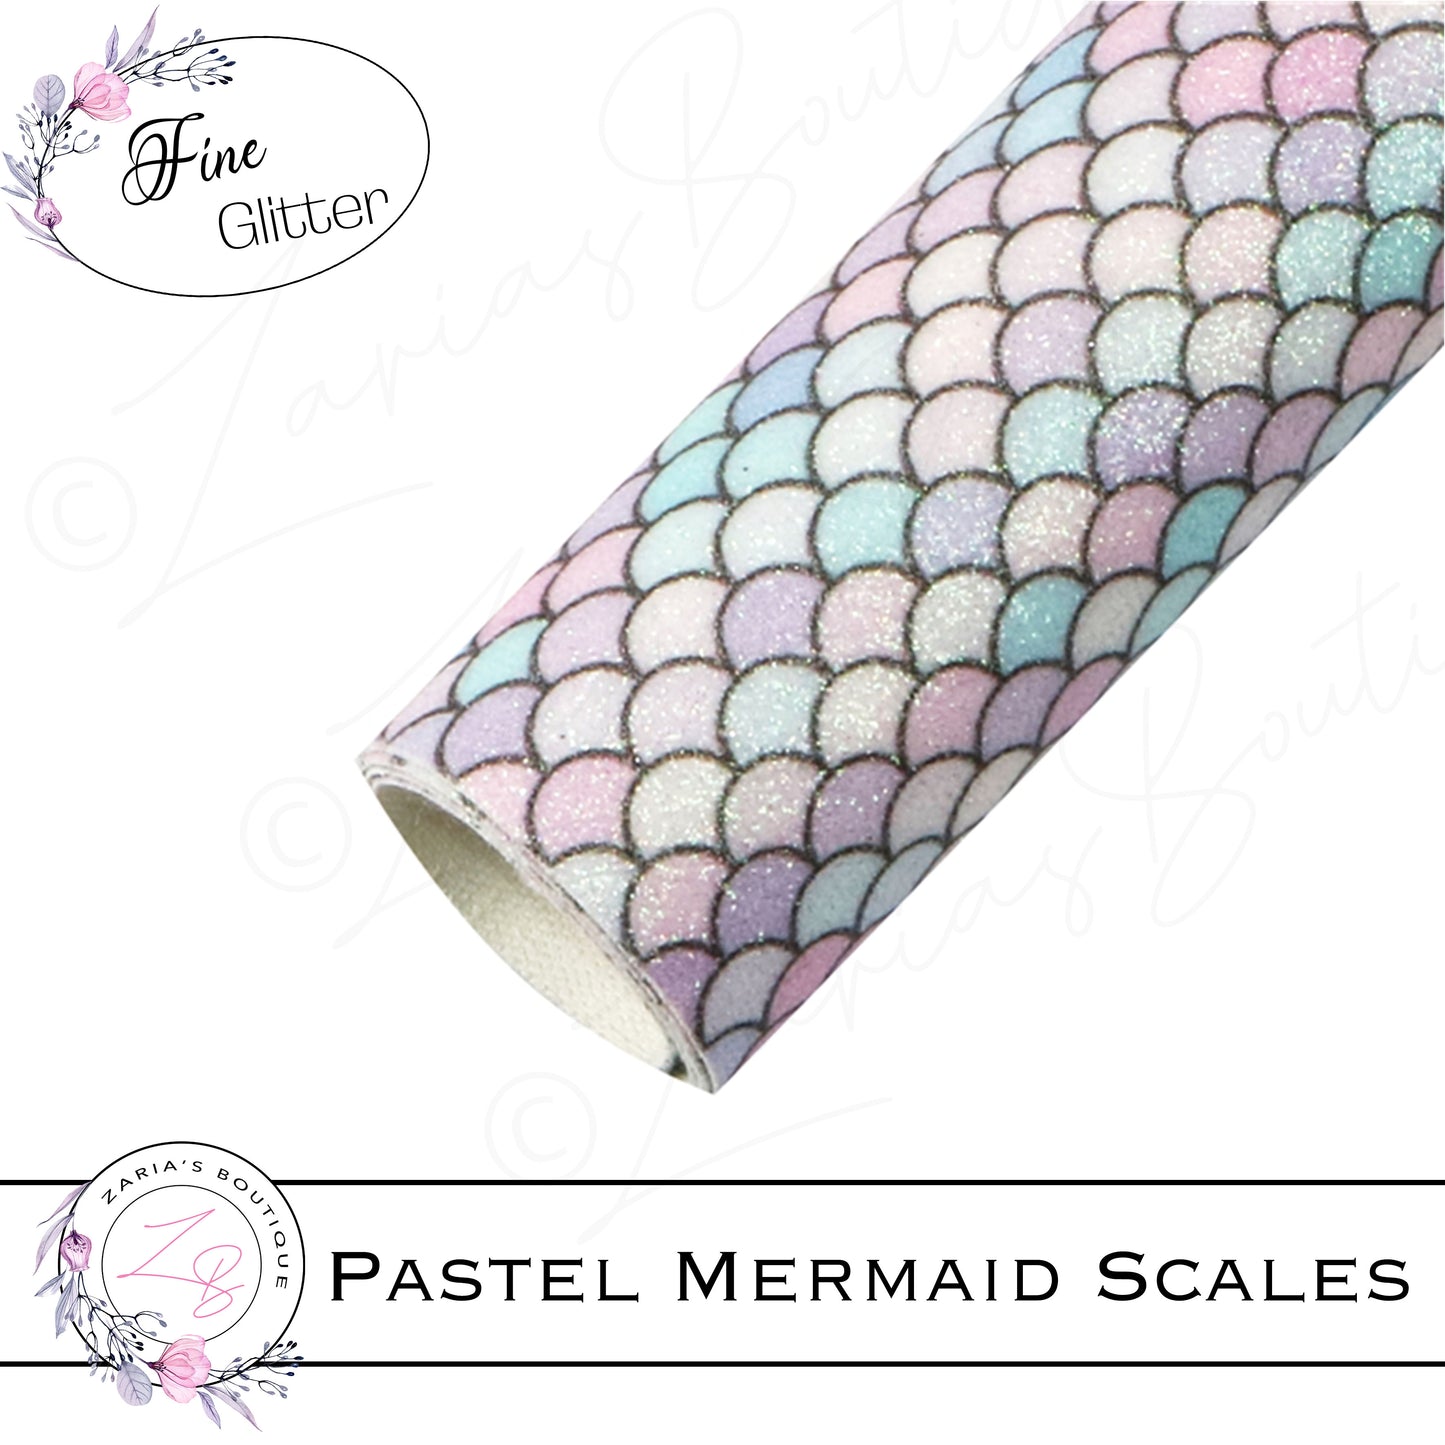 ⋅ Pastel Mermaid Scales ⋅ Fine Glitter Sheets ⋅